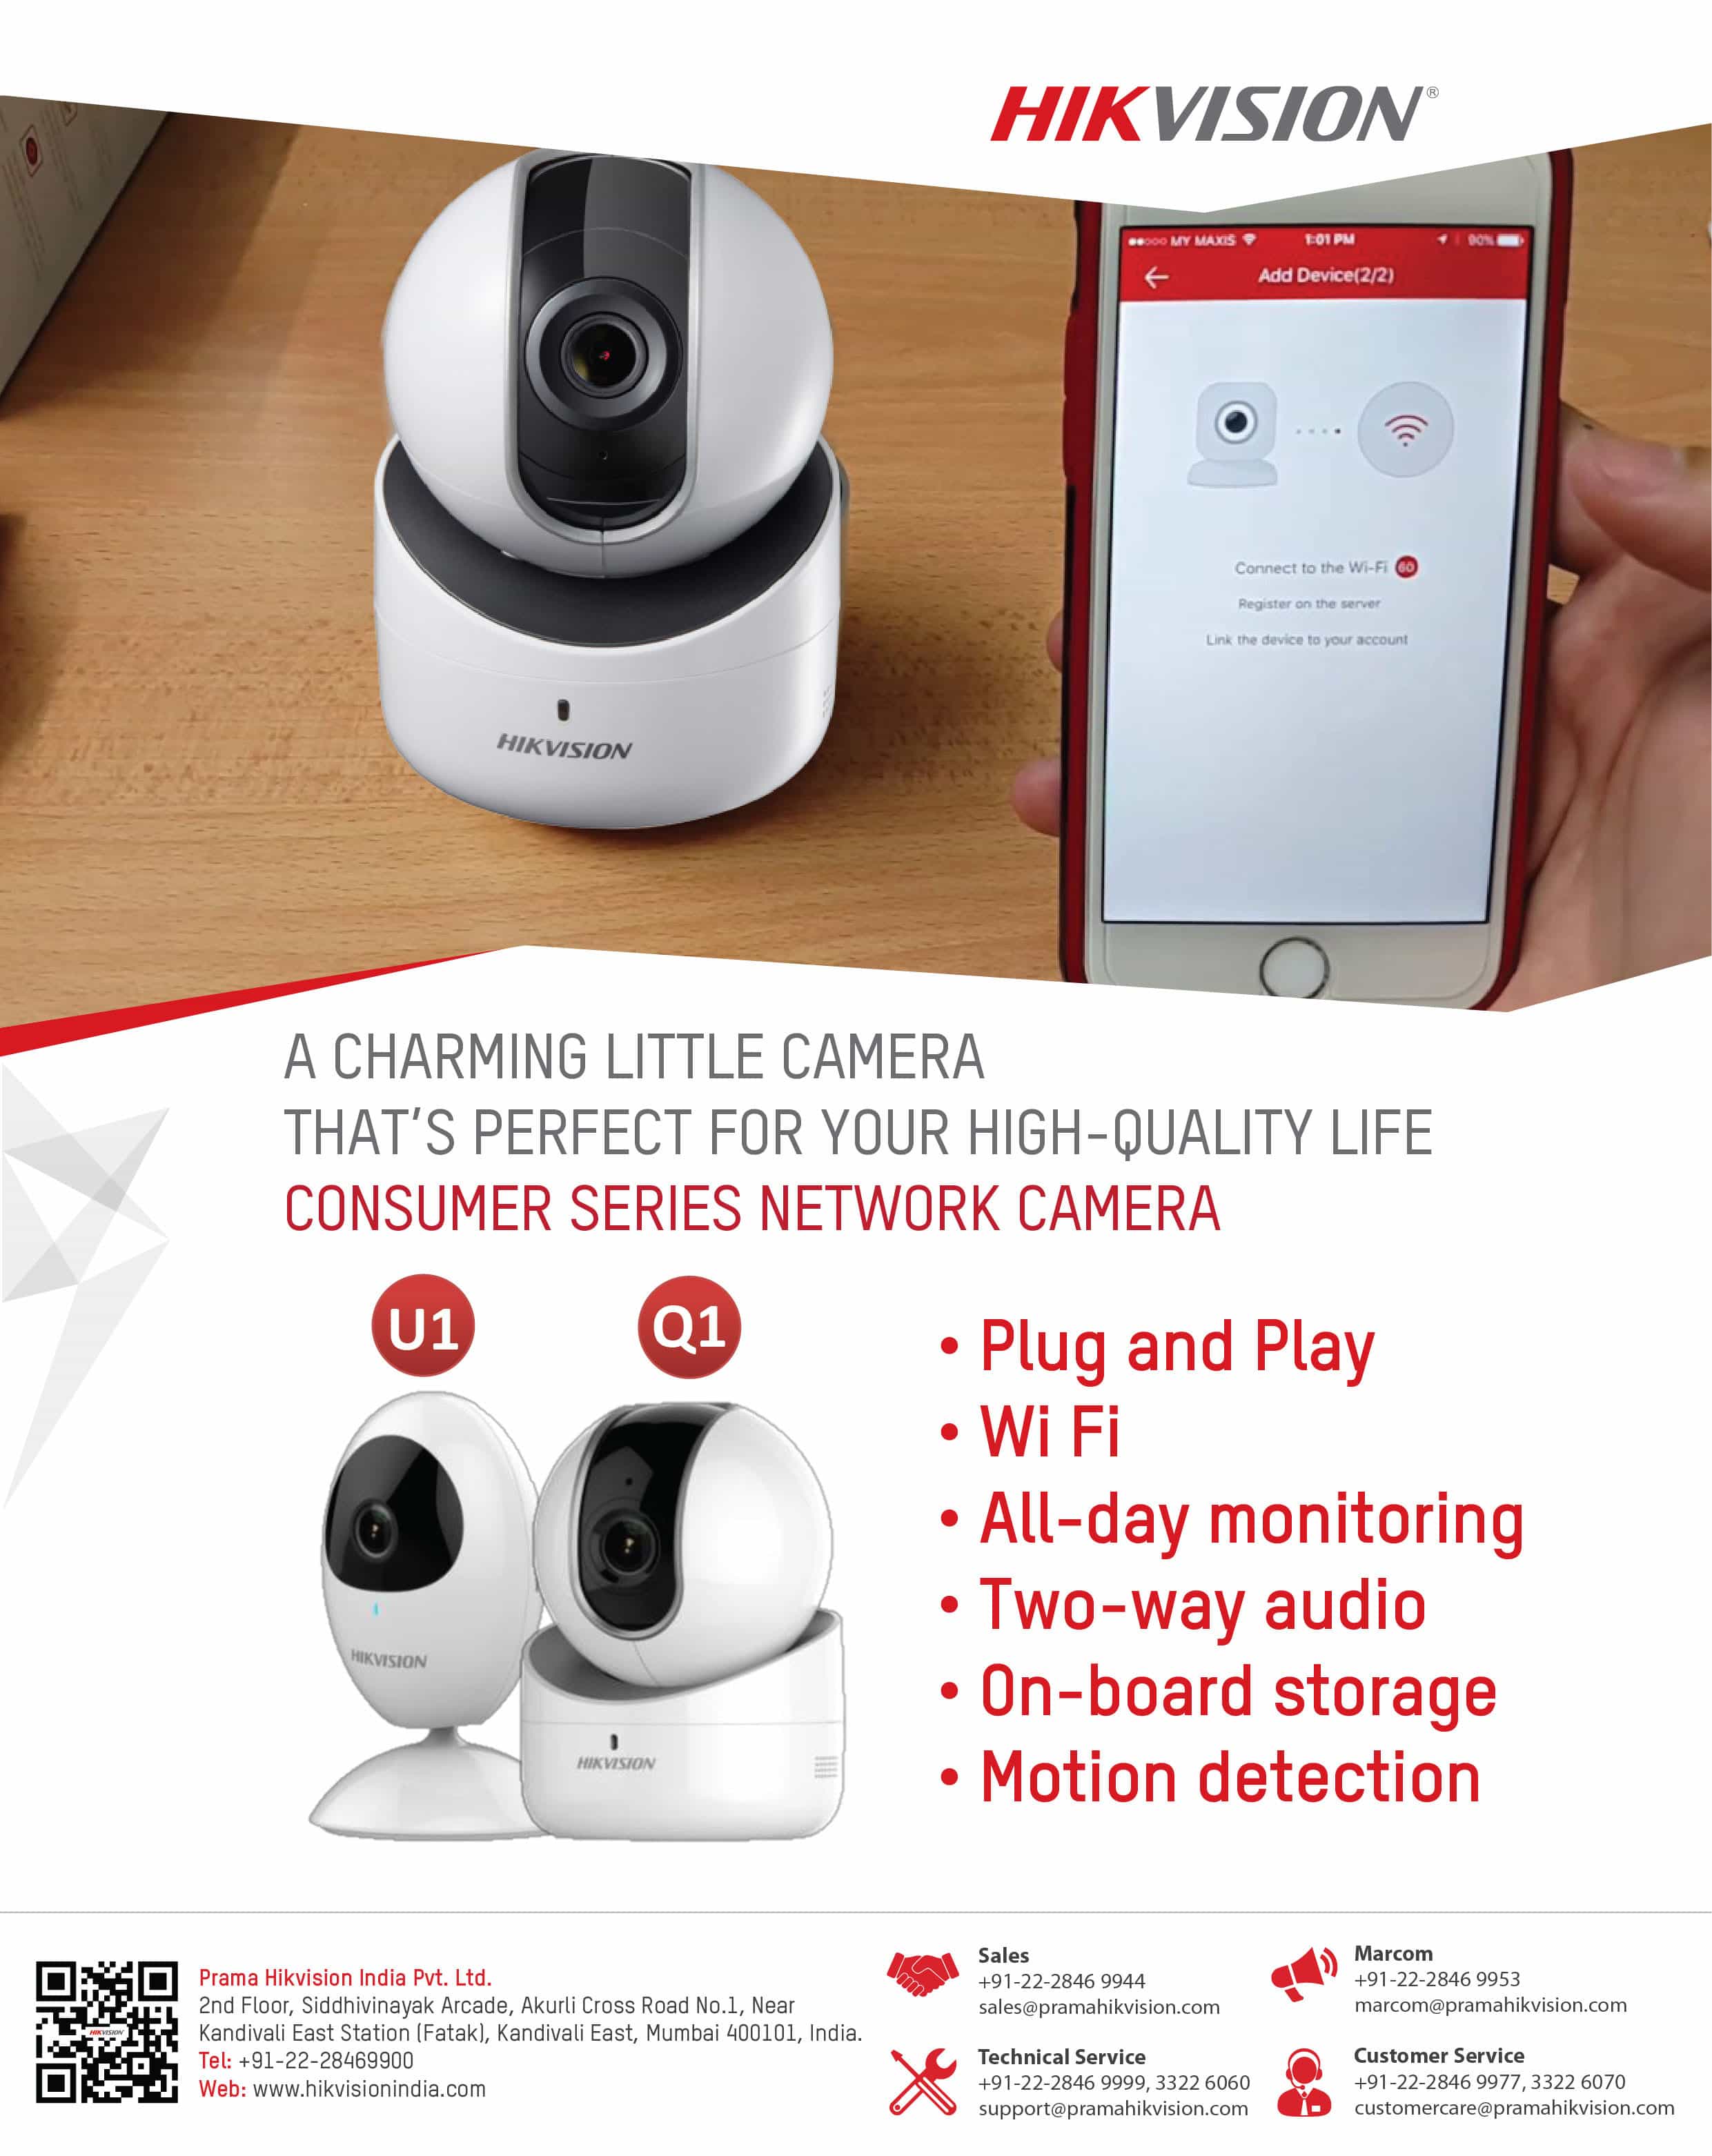 Hikvision Consumer Series Network Camera